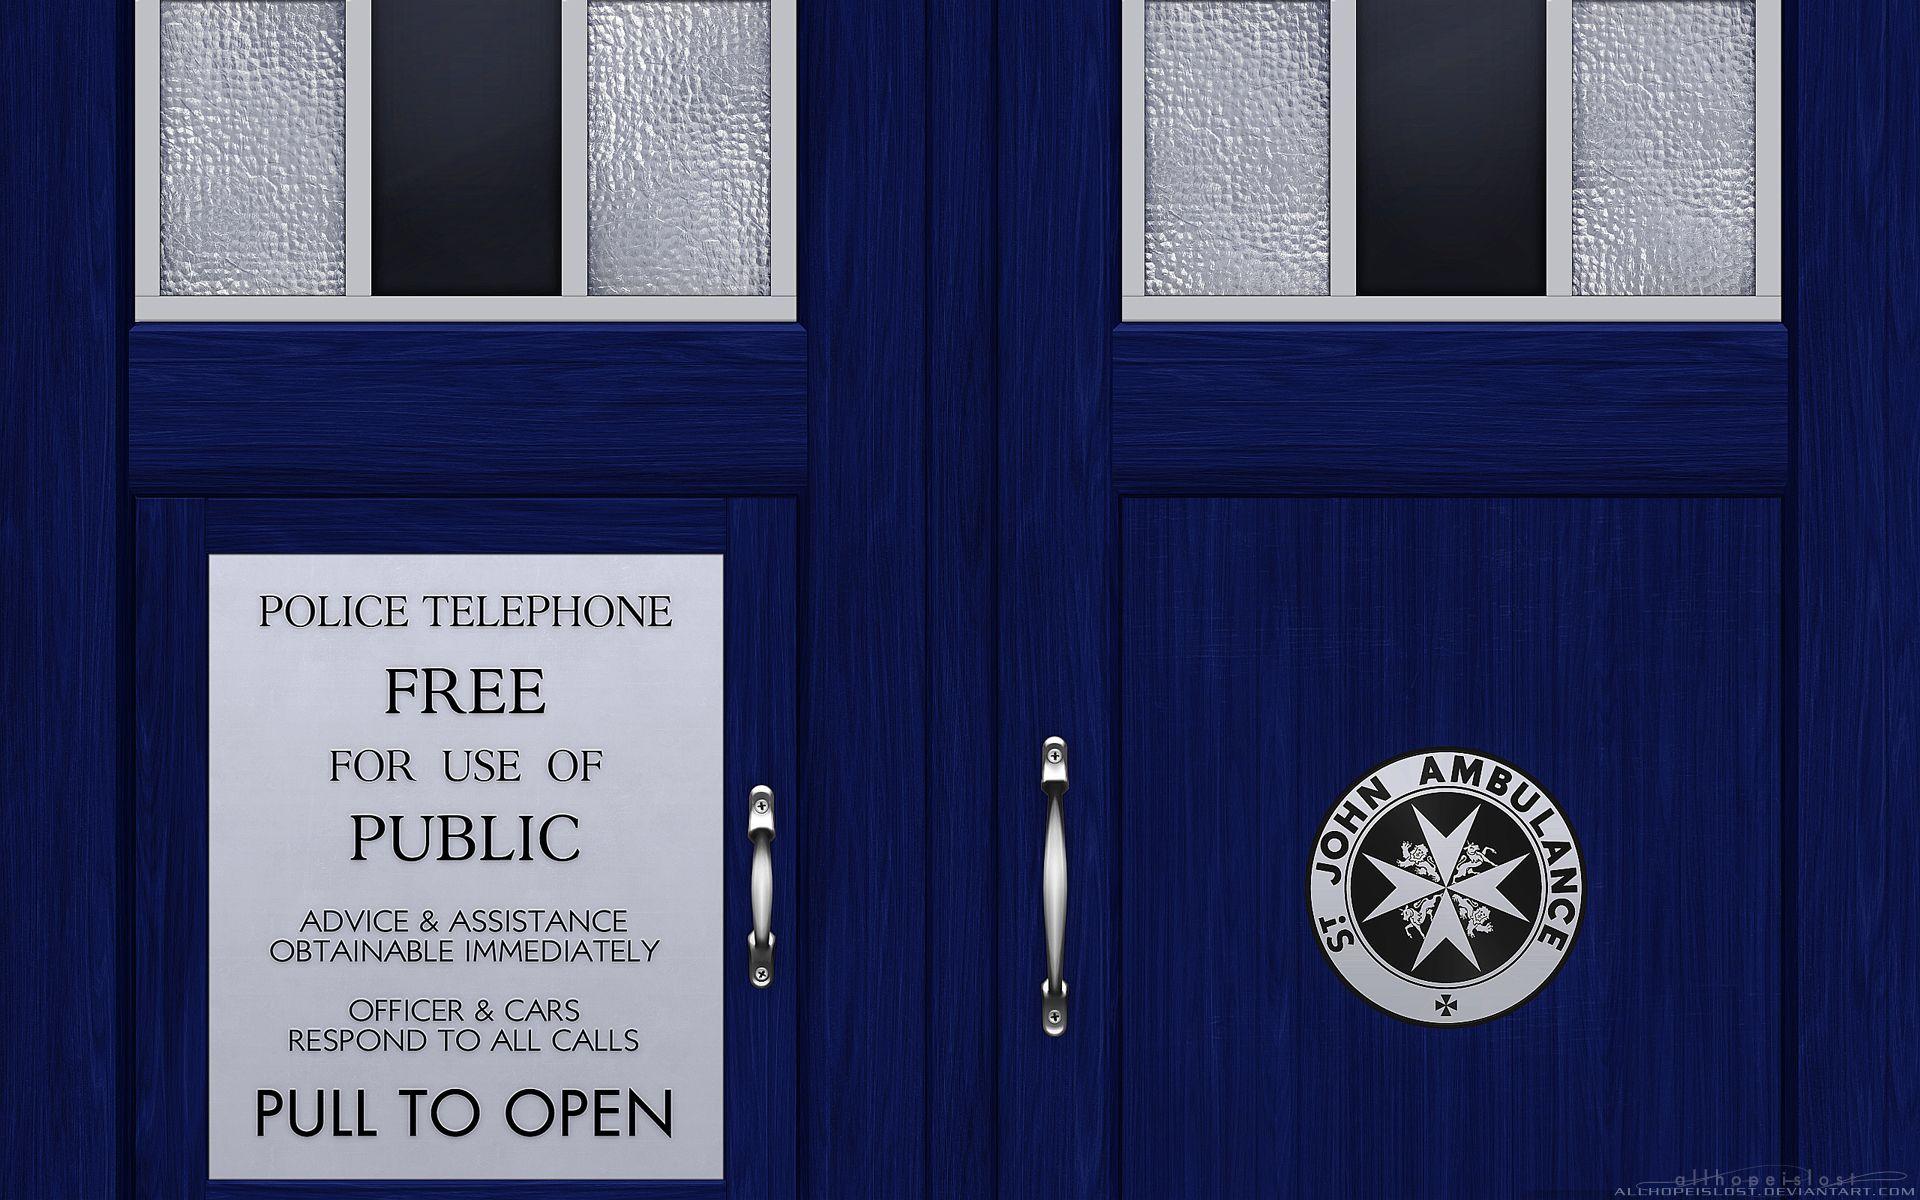 Doctor Who Tardis Wallpaper 1920x1080